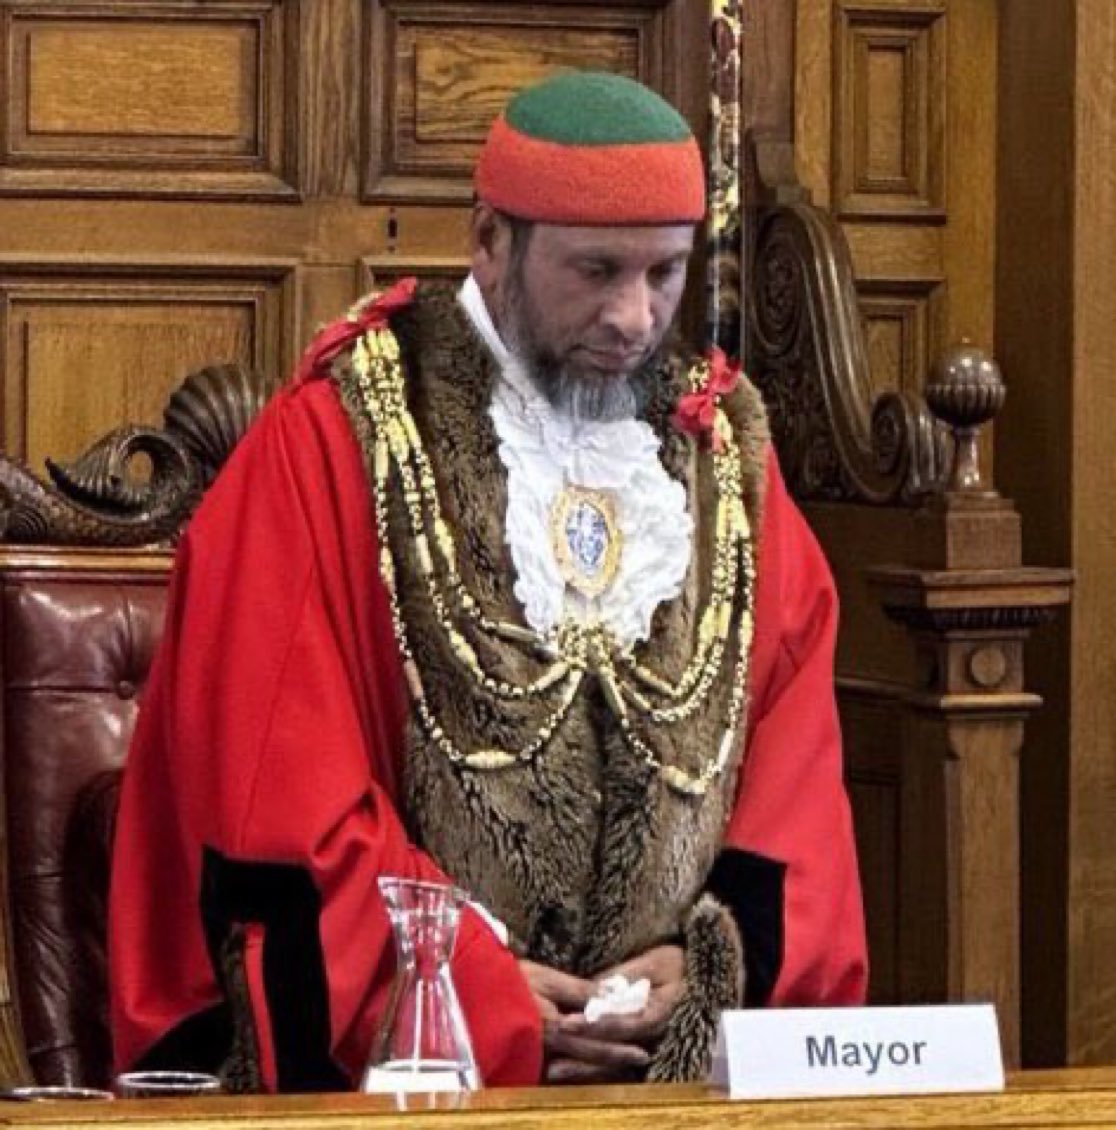 The new Mayor of Brighton, England, Mohammed Asaduzzaman. 

Brighton has fallen.